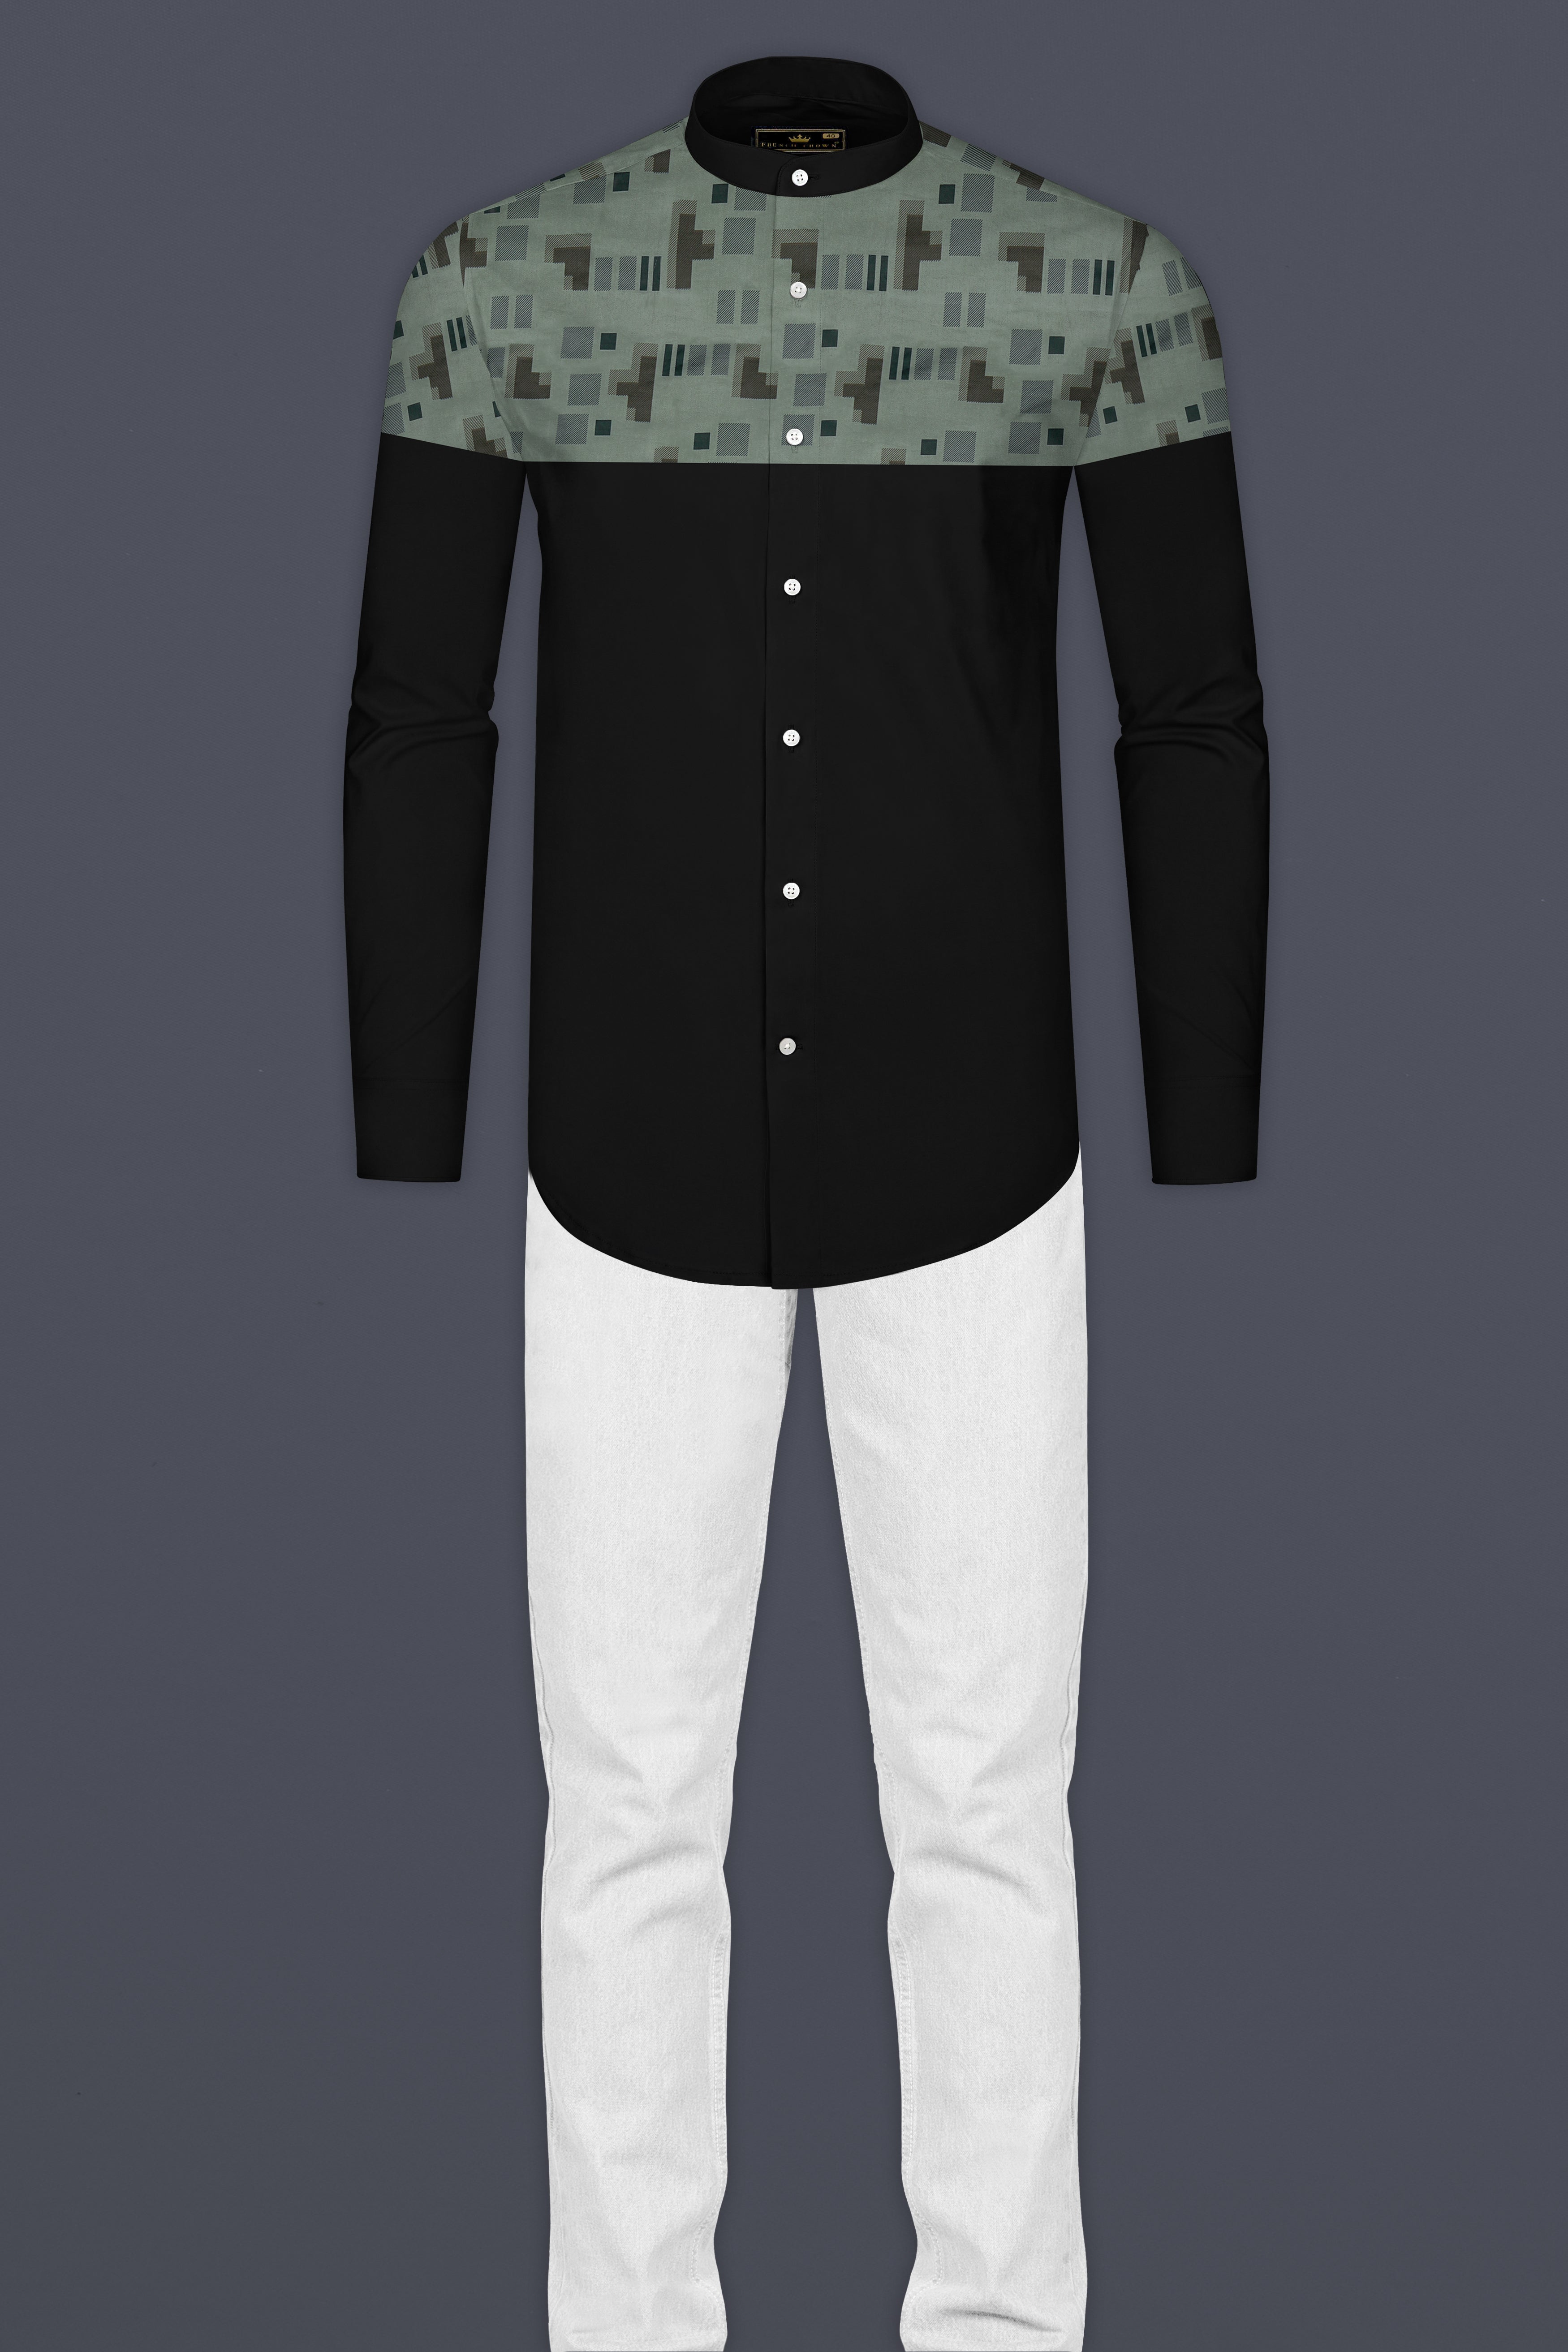 Jade Black and Pale Oyster Super Soft Premium Cotton Shirt